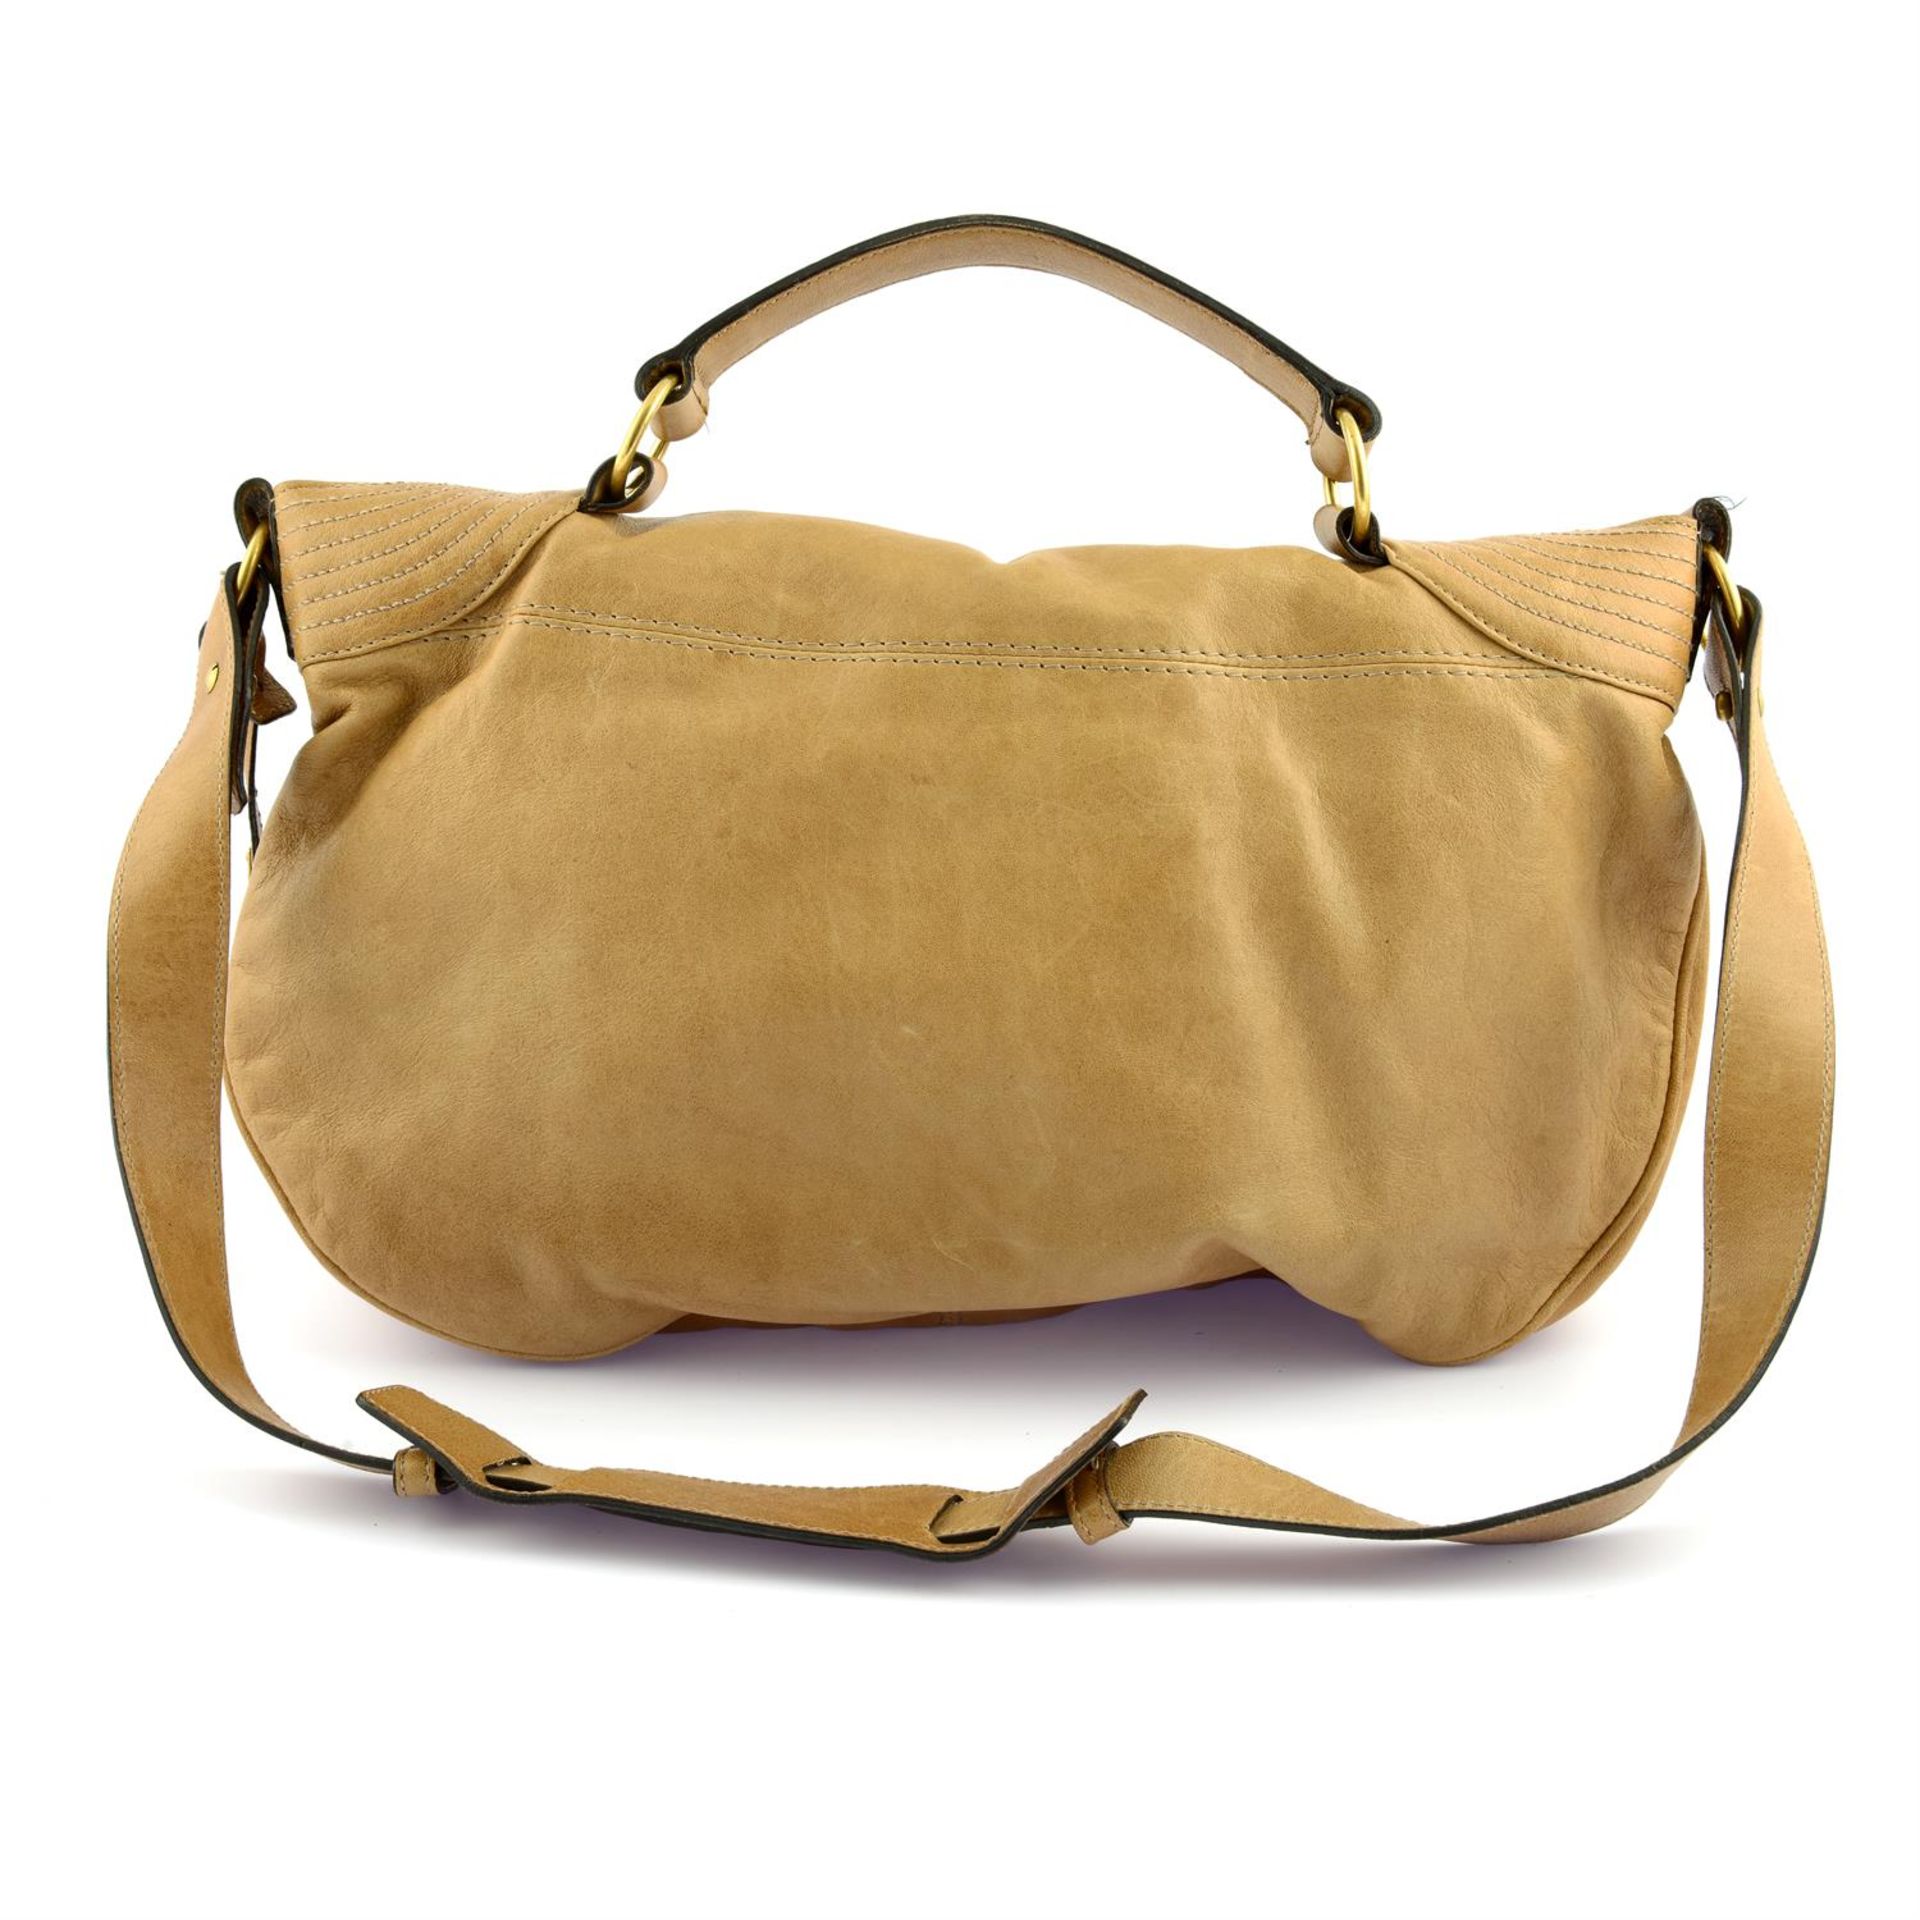 ALEXANDER MCQUEEN - a tan leather Faithfull handbag. - Image 2 of 5